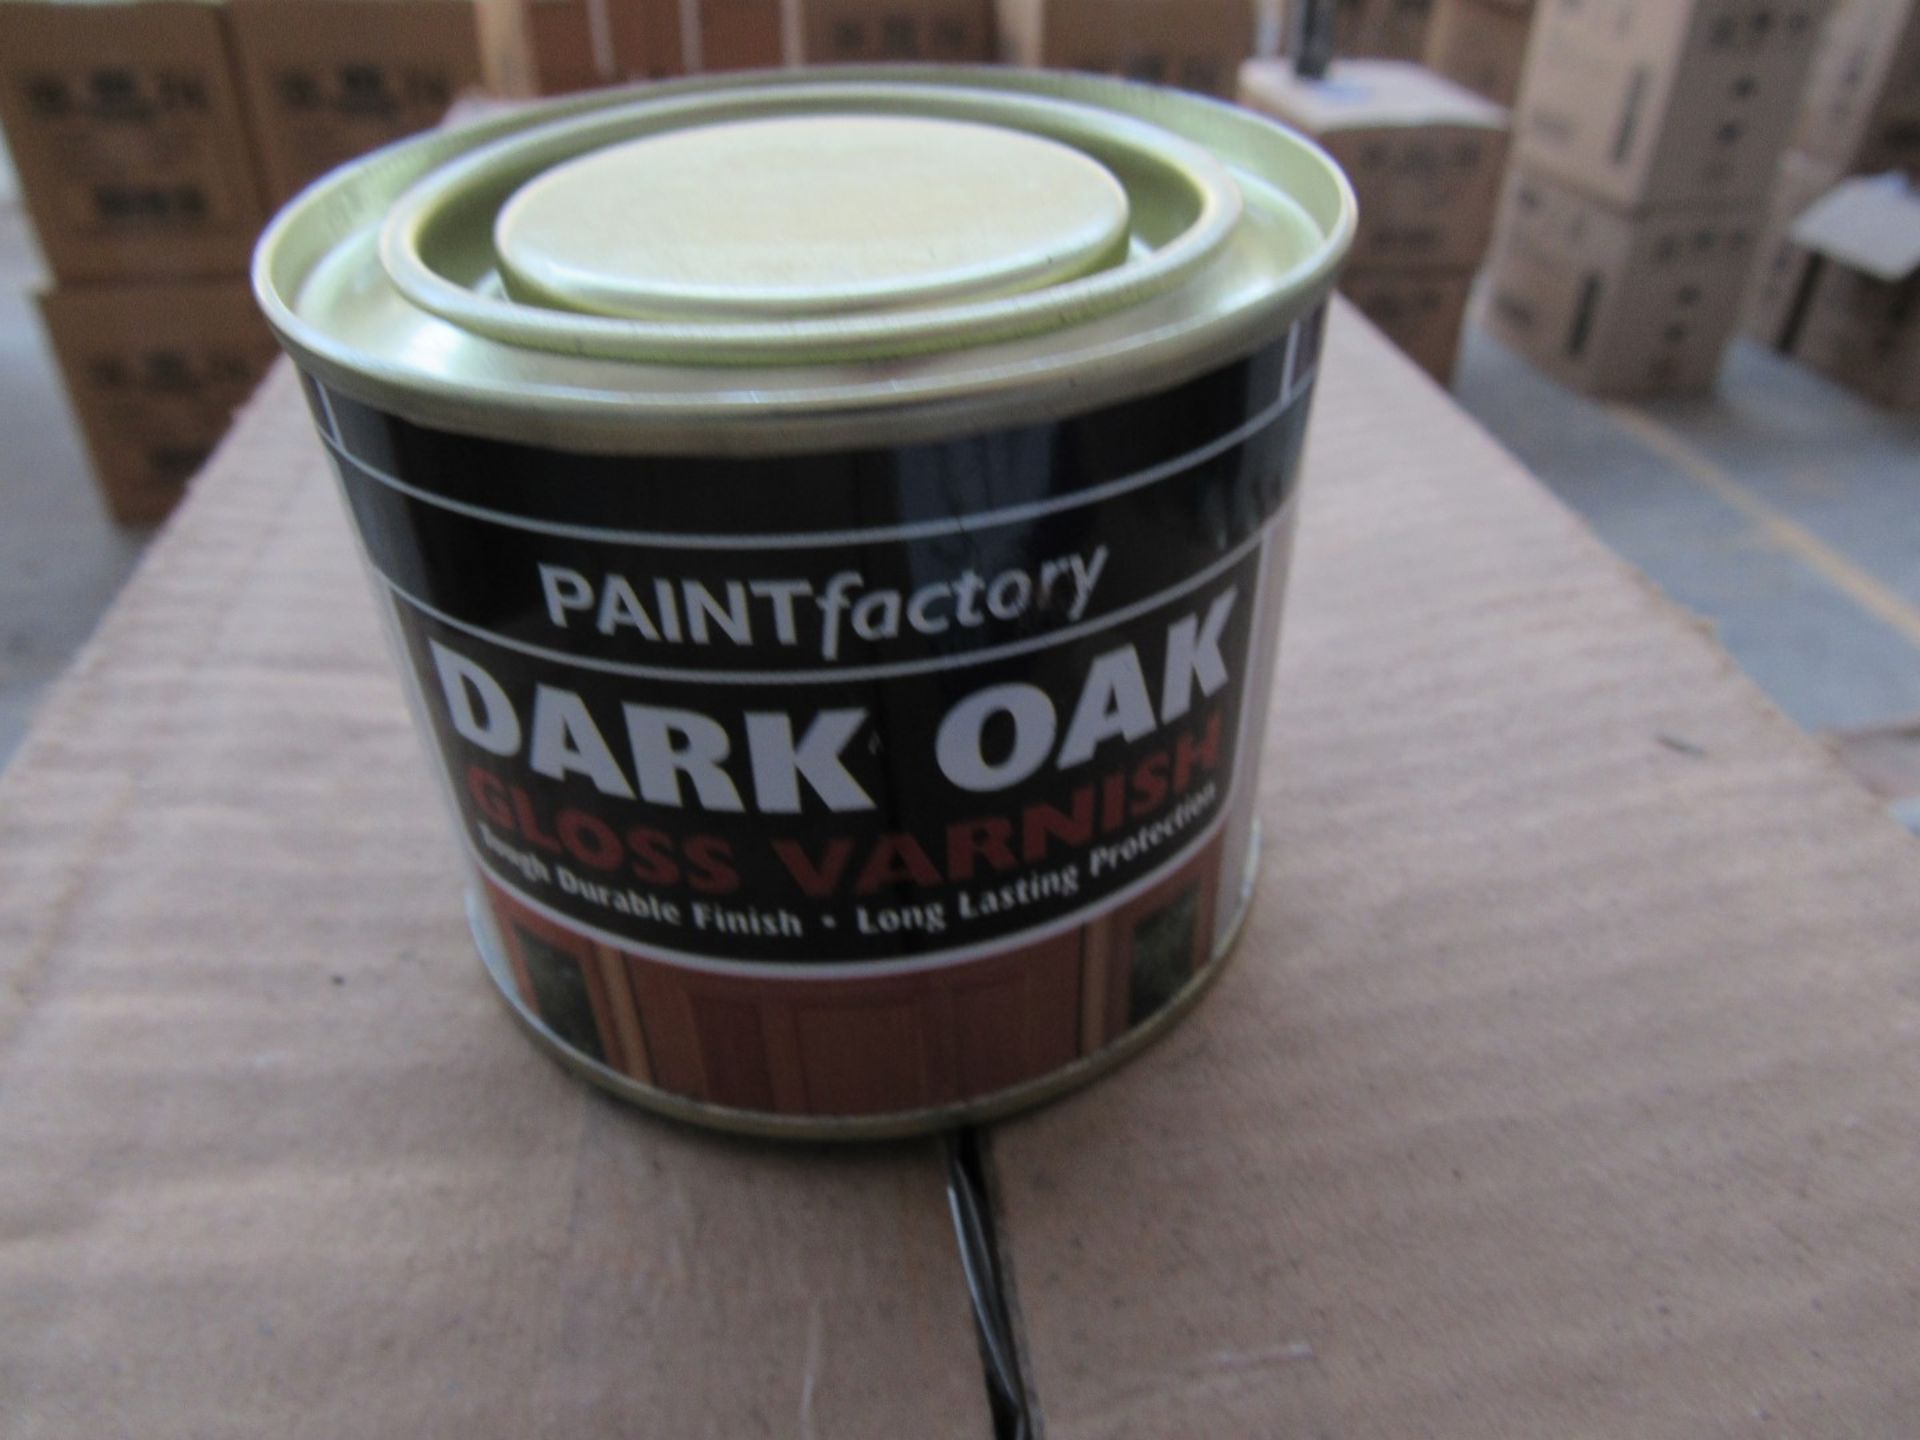 Quantity dark oak gloss varnish 170ml - Image 2 of 2